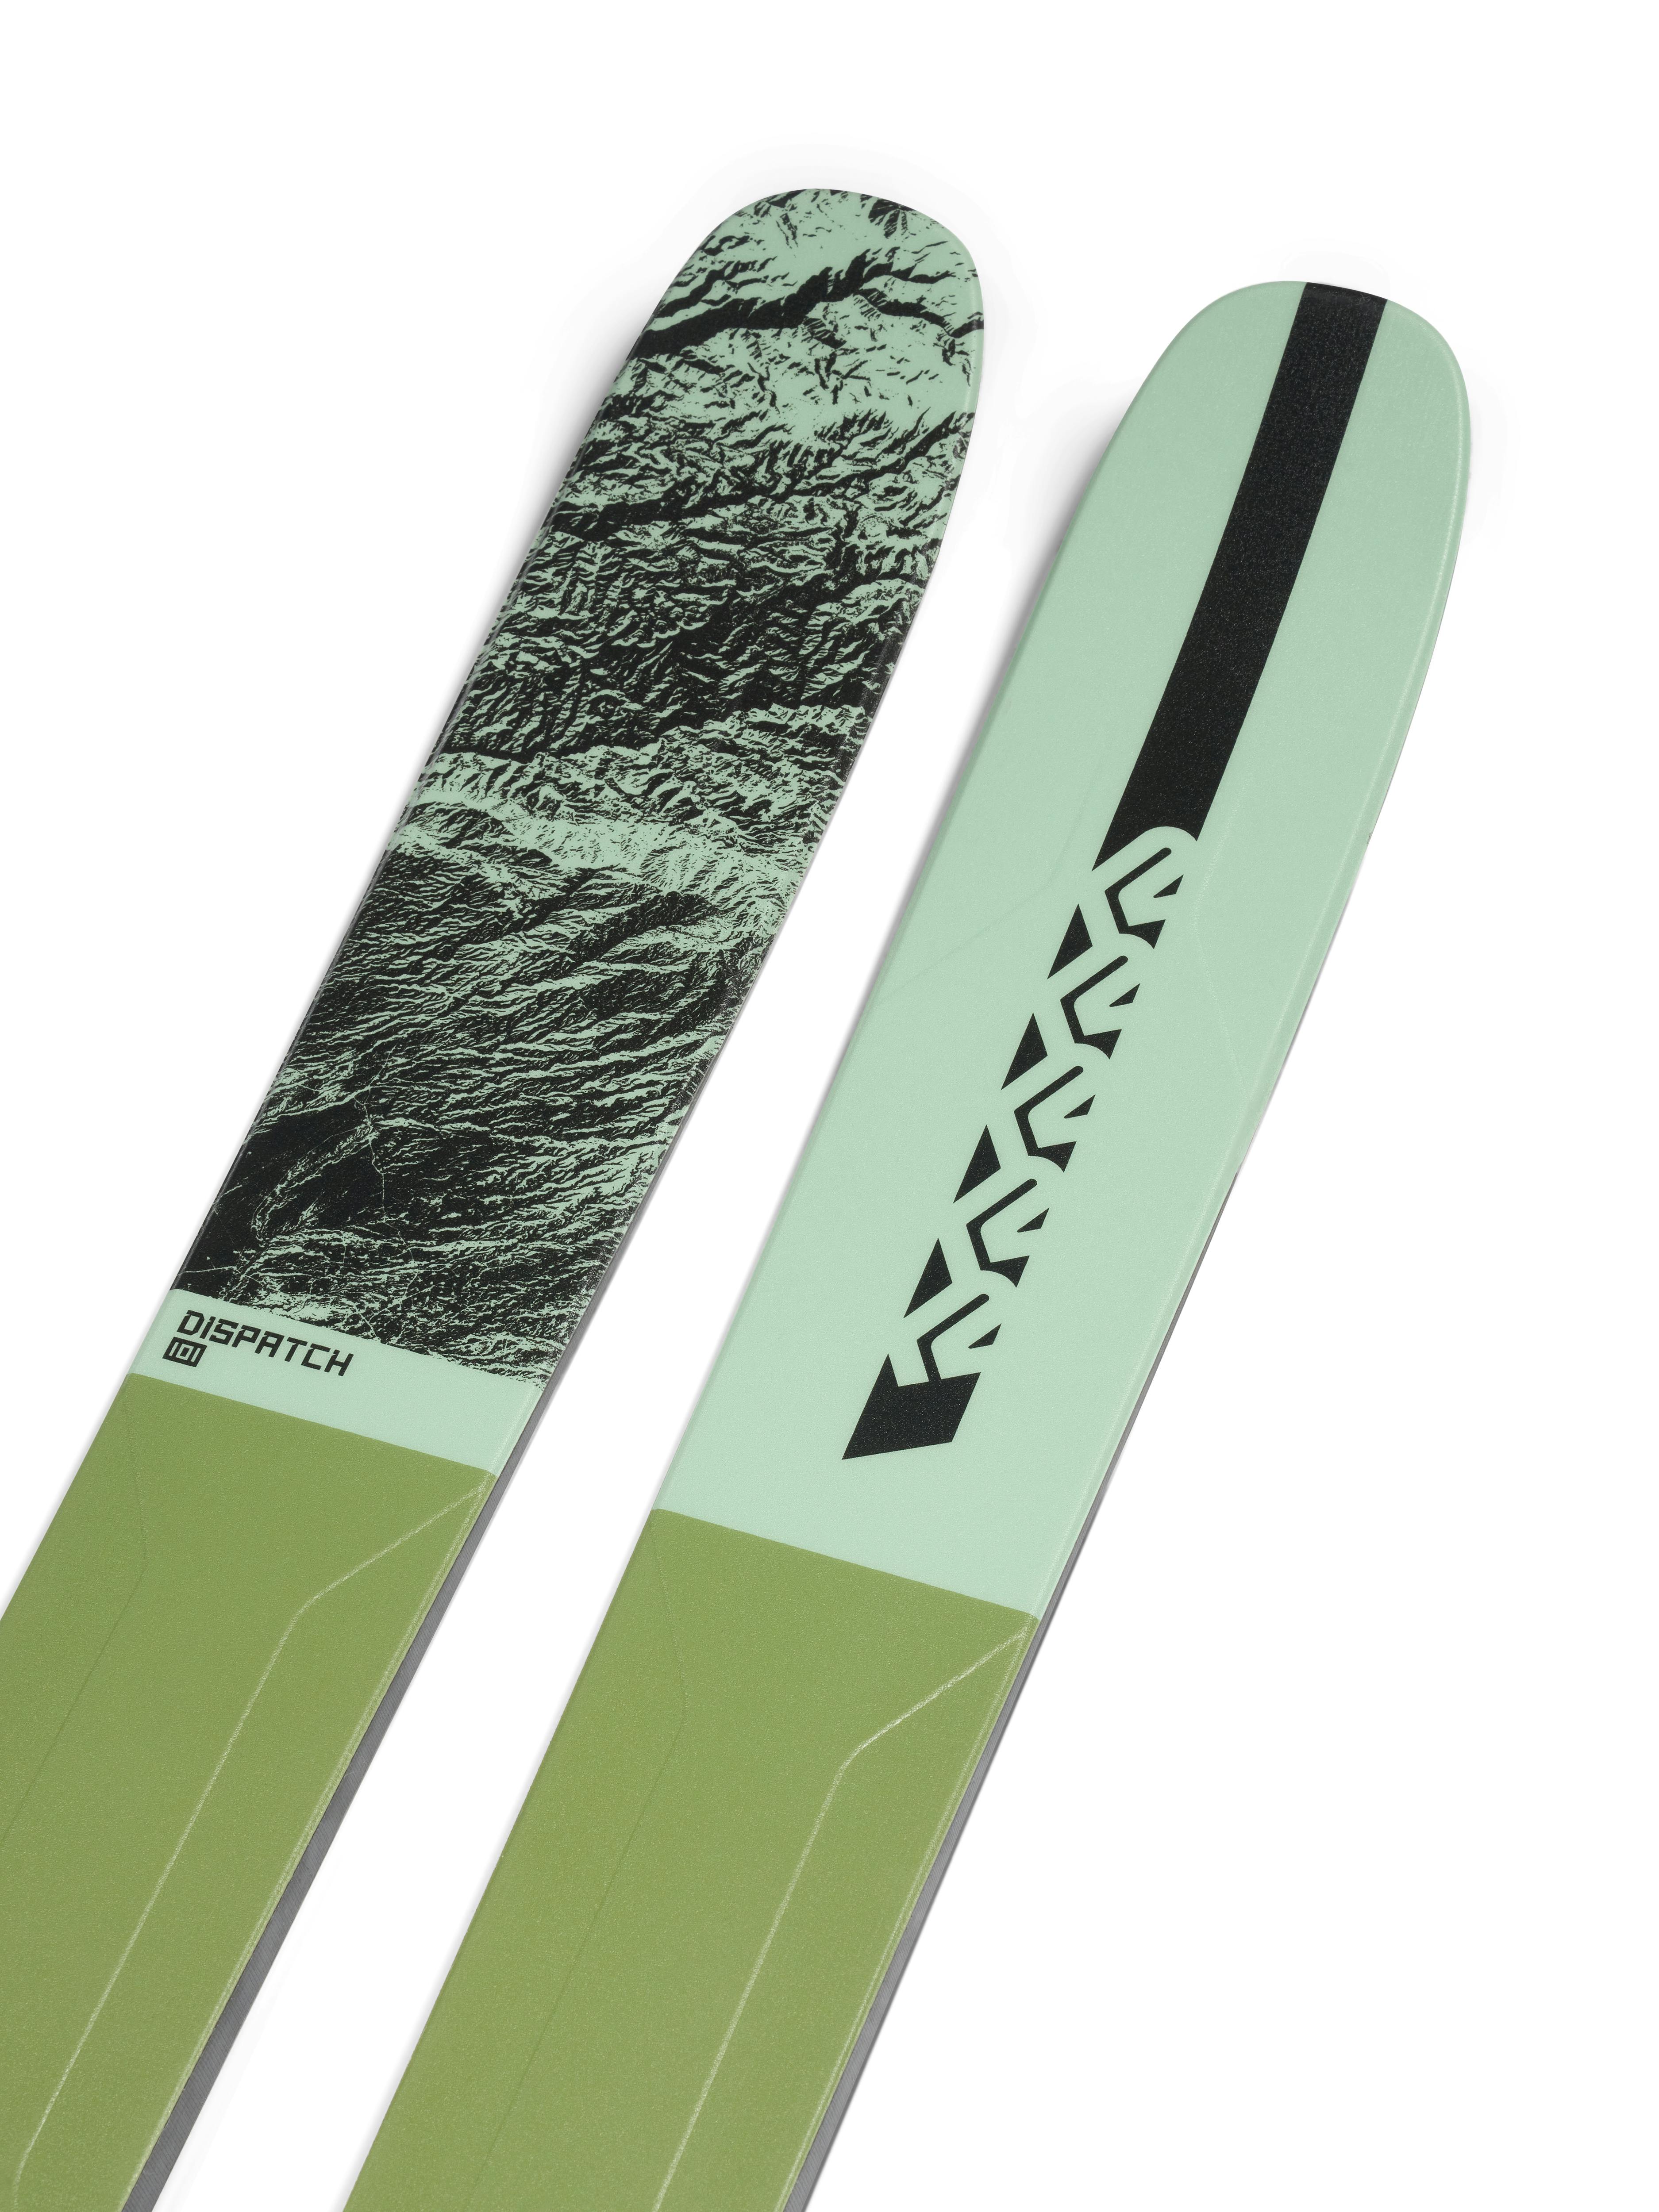 K2 Dispatch 101 Skis · 2023